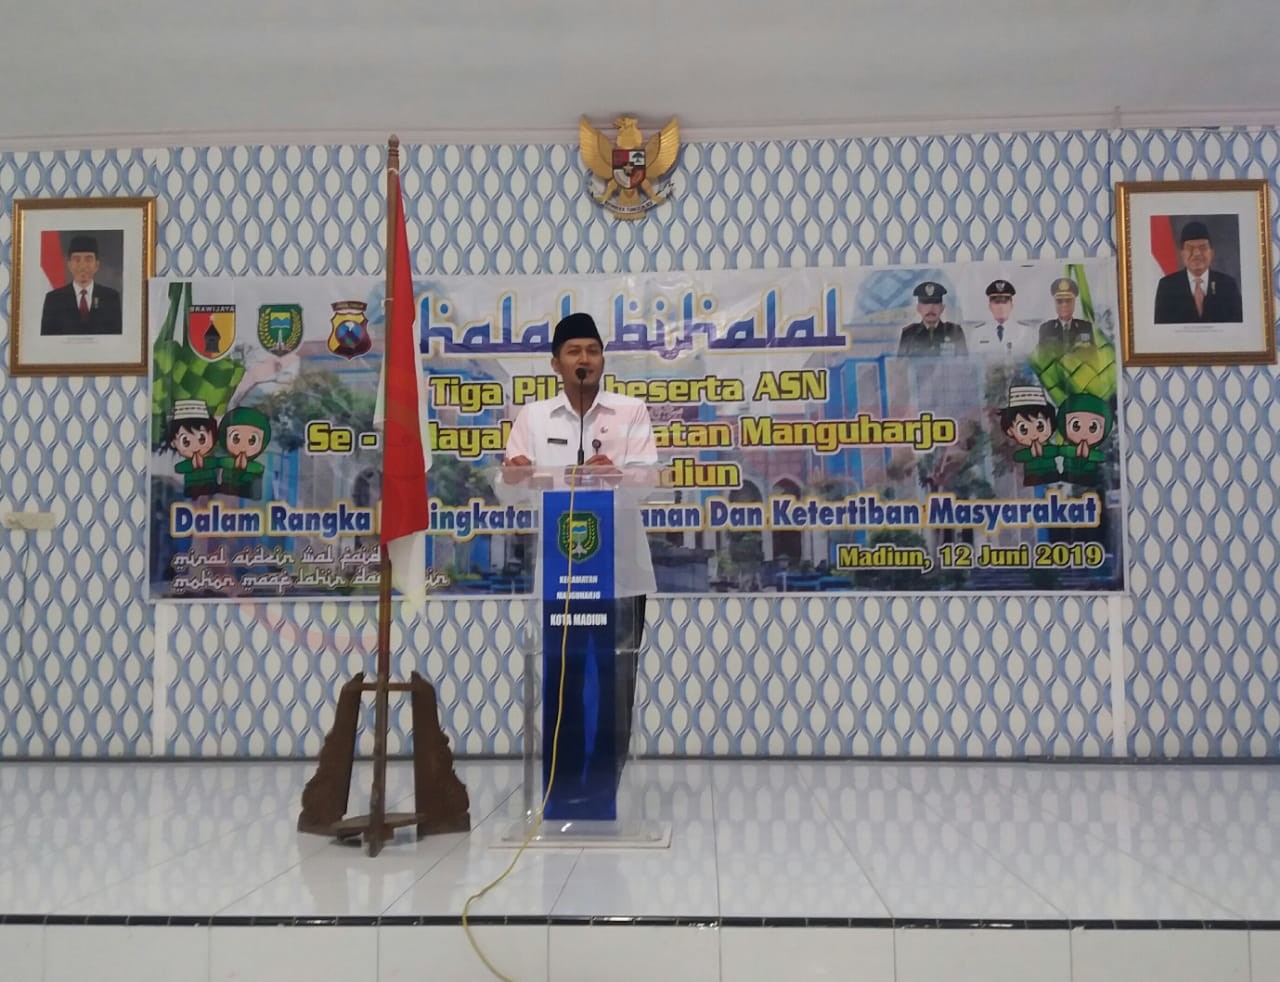 LensaHukum.co.id - IMG 20190612 WA0132 - Hikmah Idhul Fitri Danpos Ramil Manguharjo Madiun Halal Bi Halal Bersama Tiga Pilar